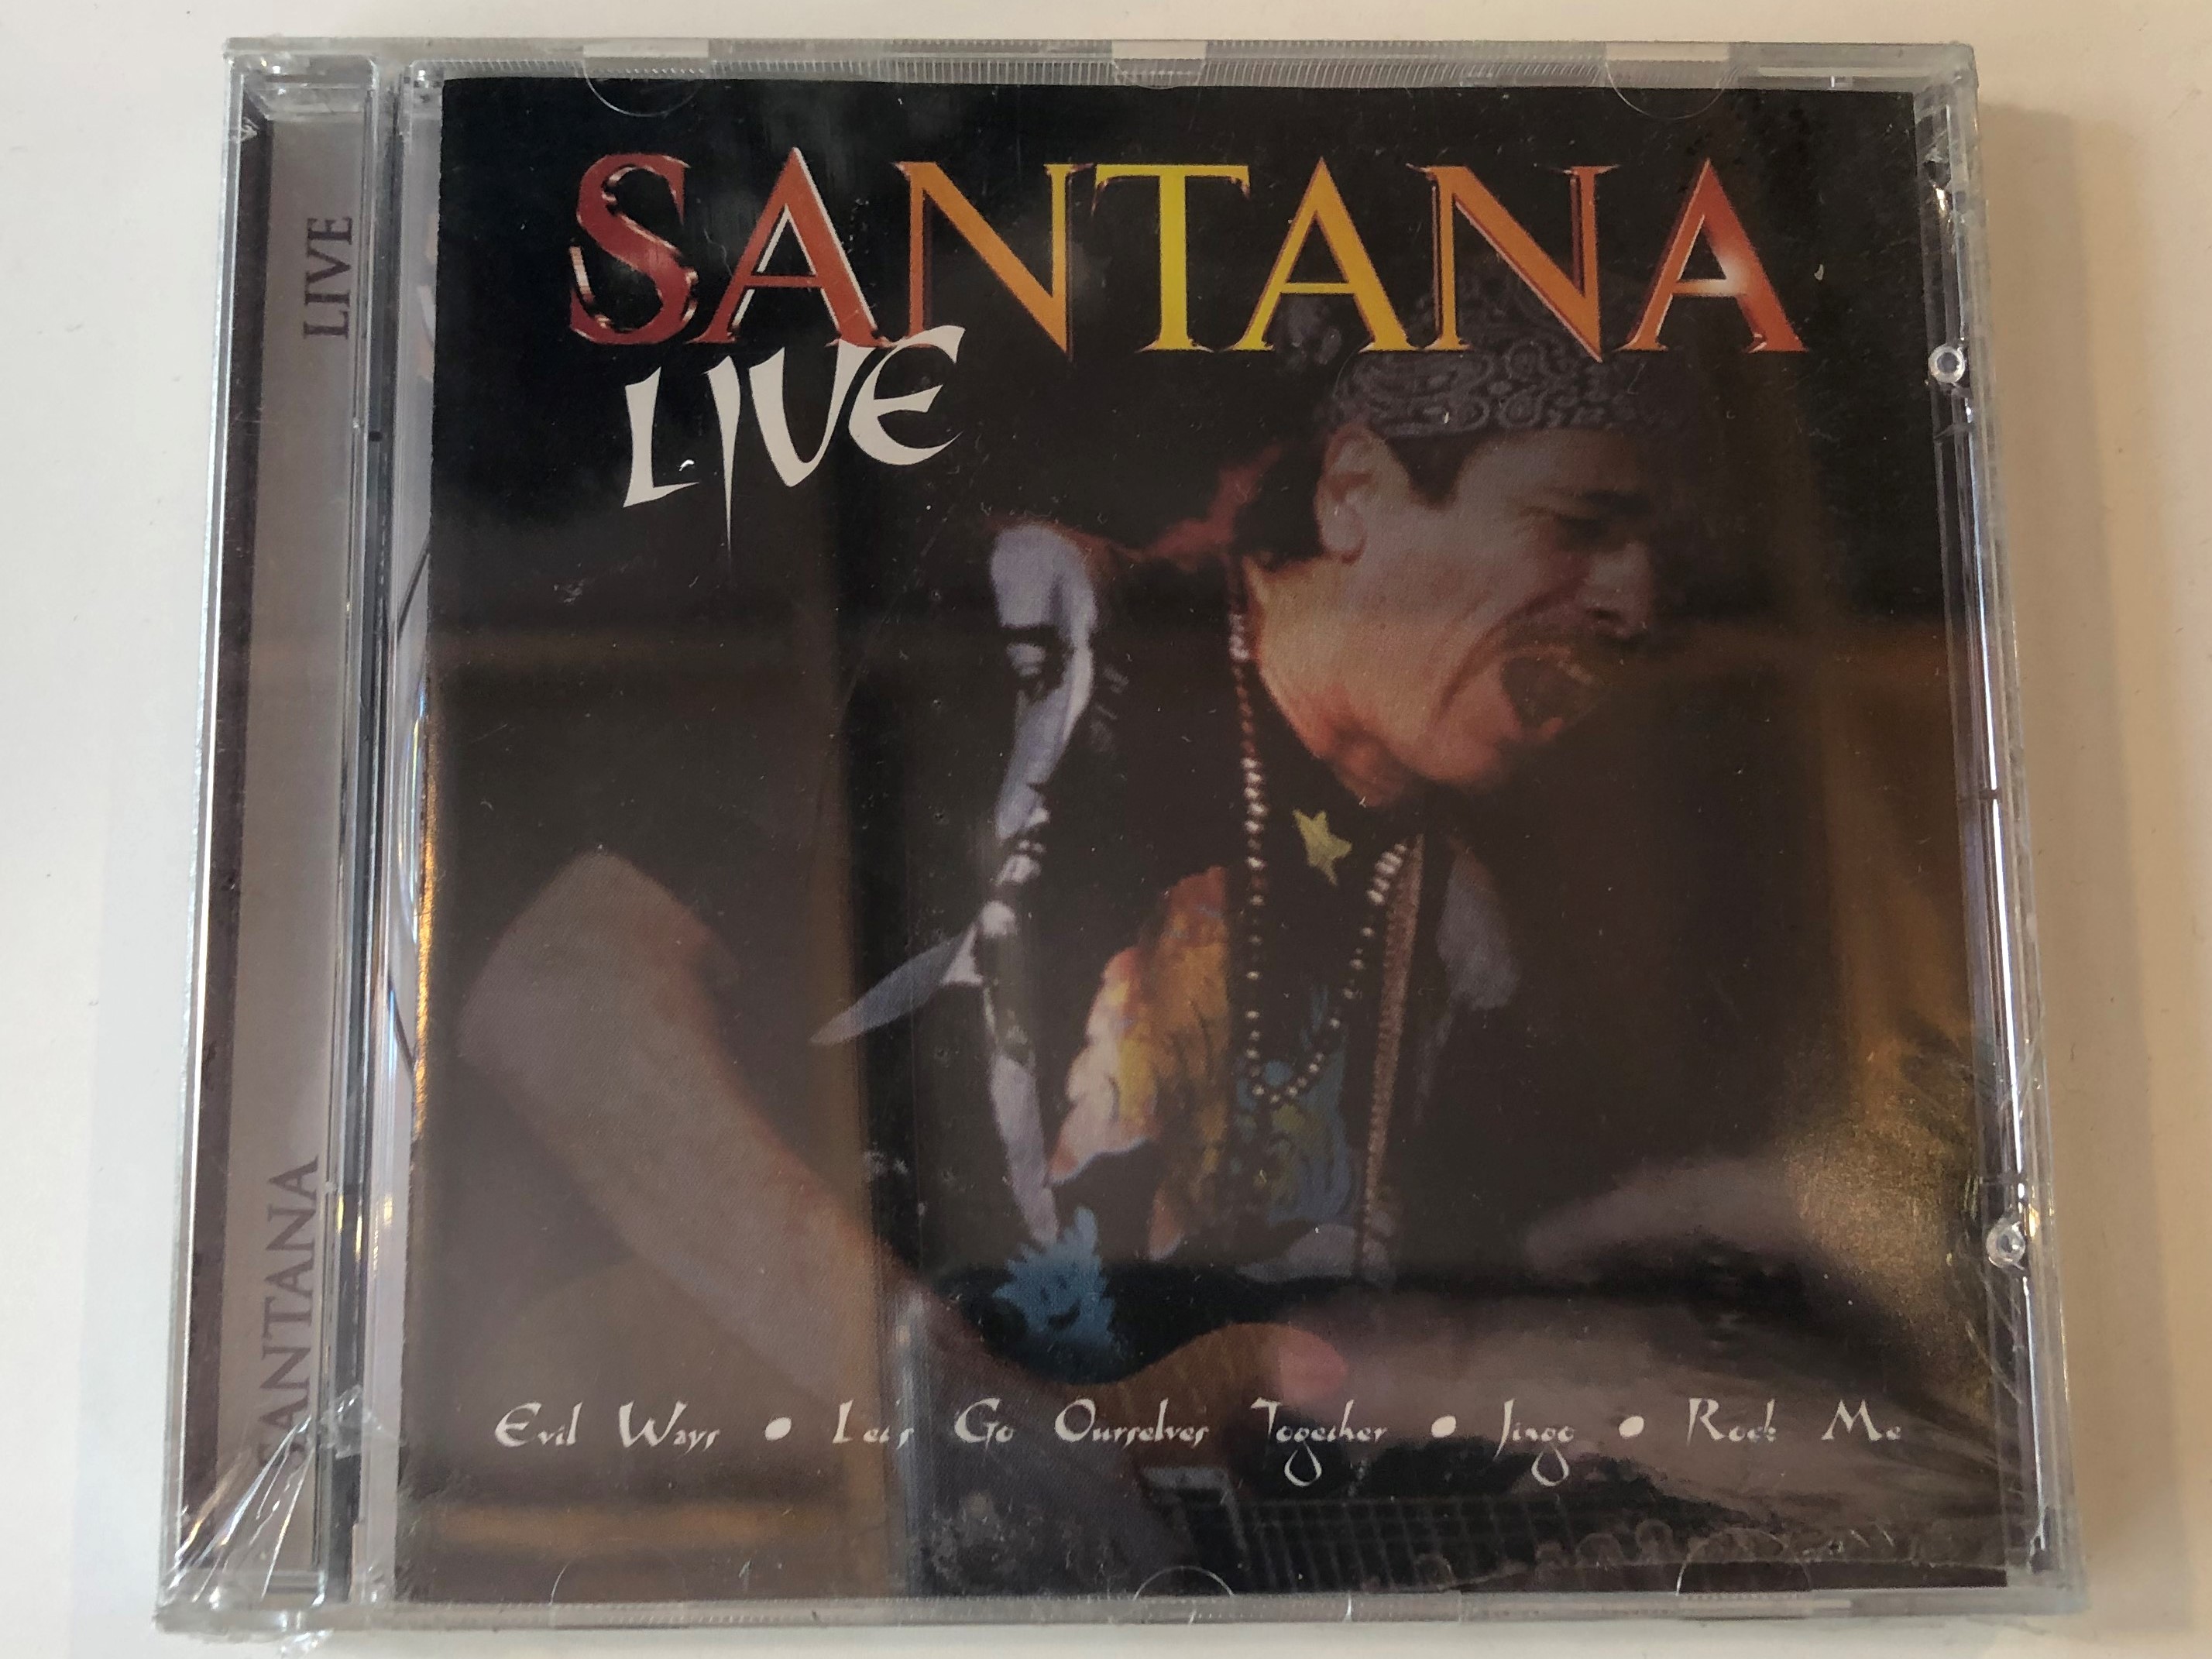 santana-live-evil-ways-let-s-go-ourselves-together-jingo-rock-me-a-play-collection-audio-cd-10118-2-1-.jpg